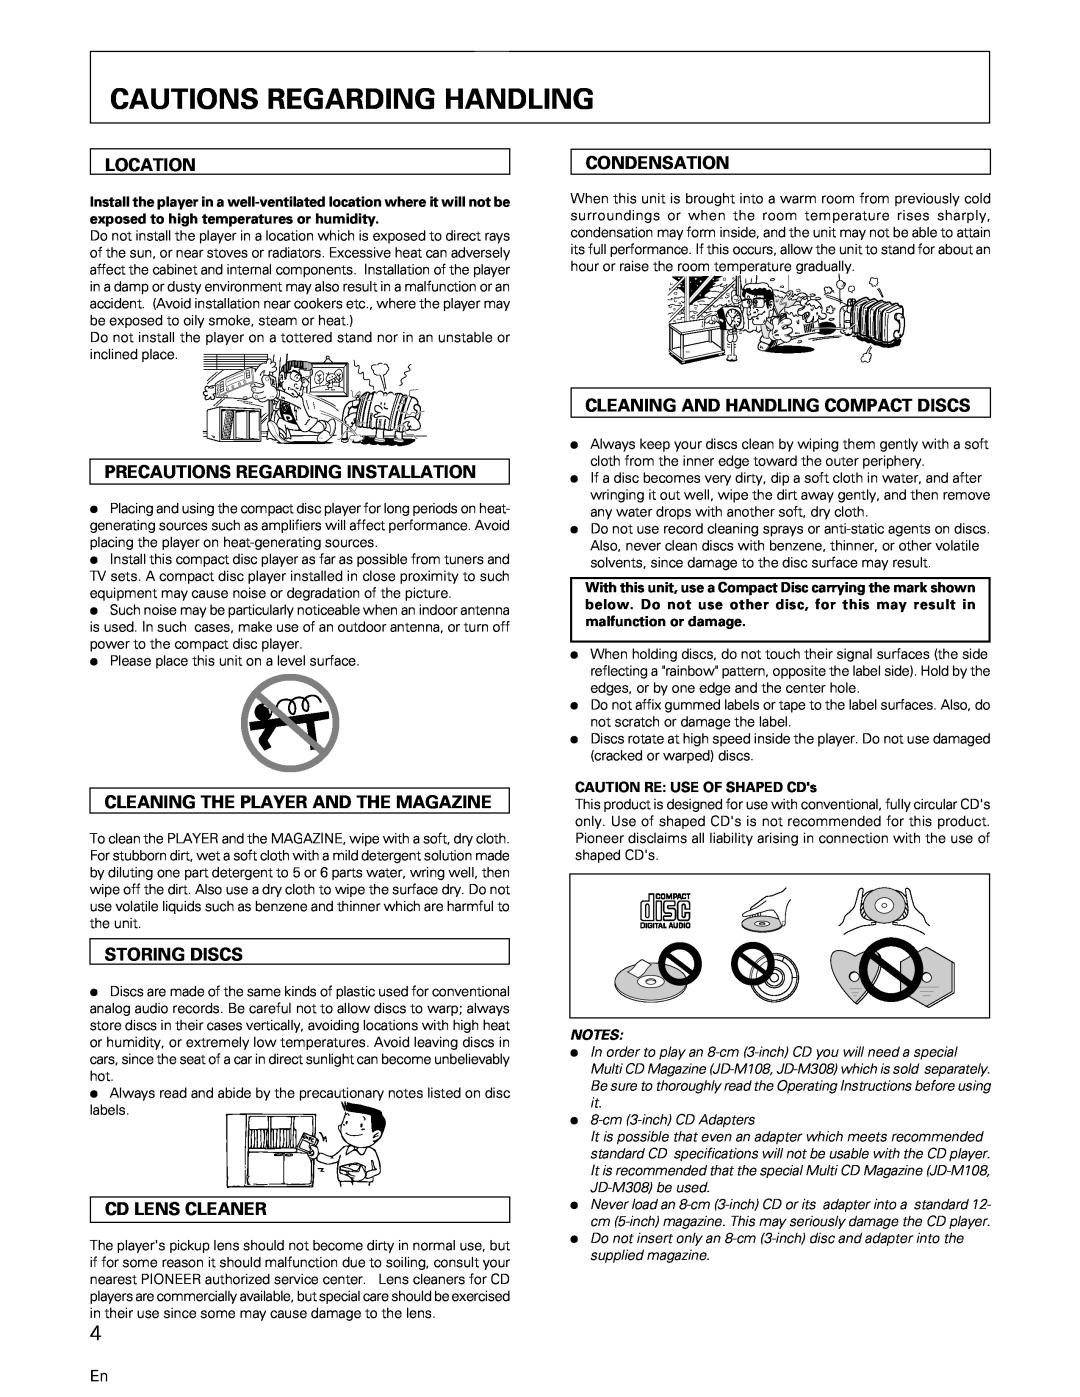 Pioneer PD-M407 Cautions Regarding Handling, Location, Precautions Regarding Installation, Storing Discs, Cd Lens Cleaner 